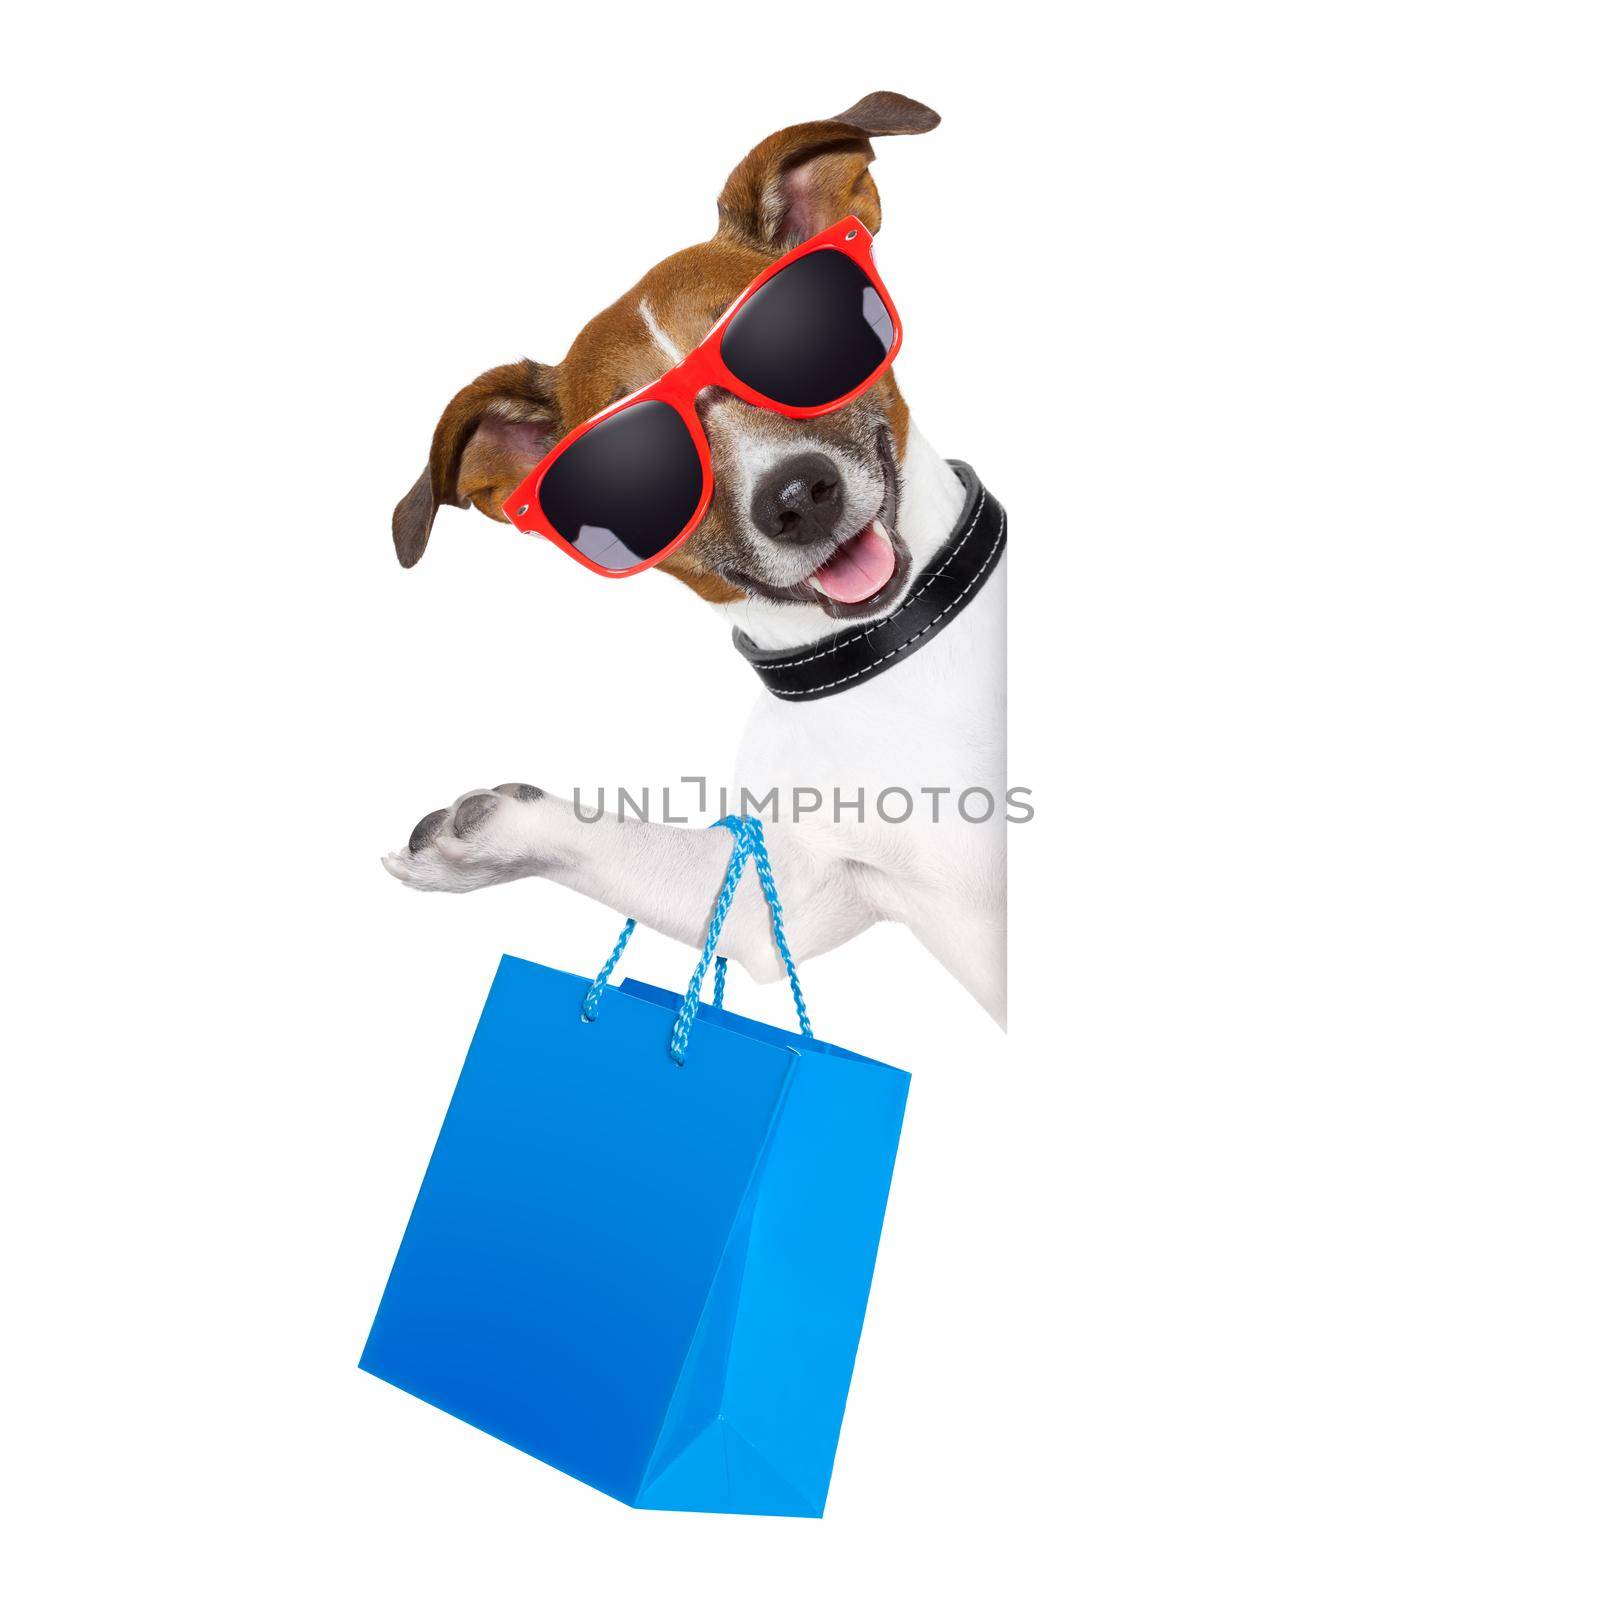 shopping dog holding a blue shopping bag wearing sunglasses